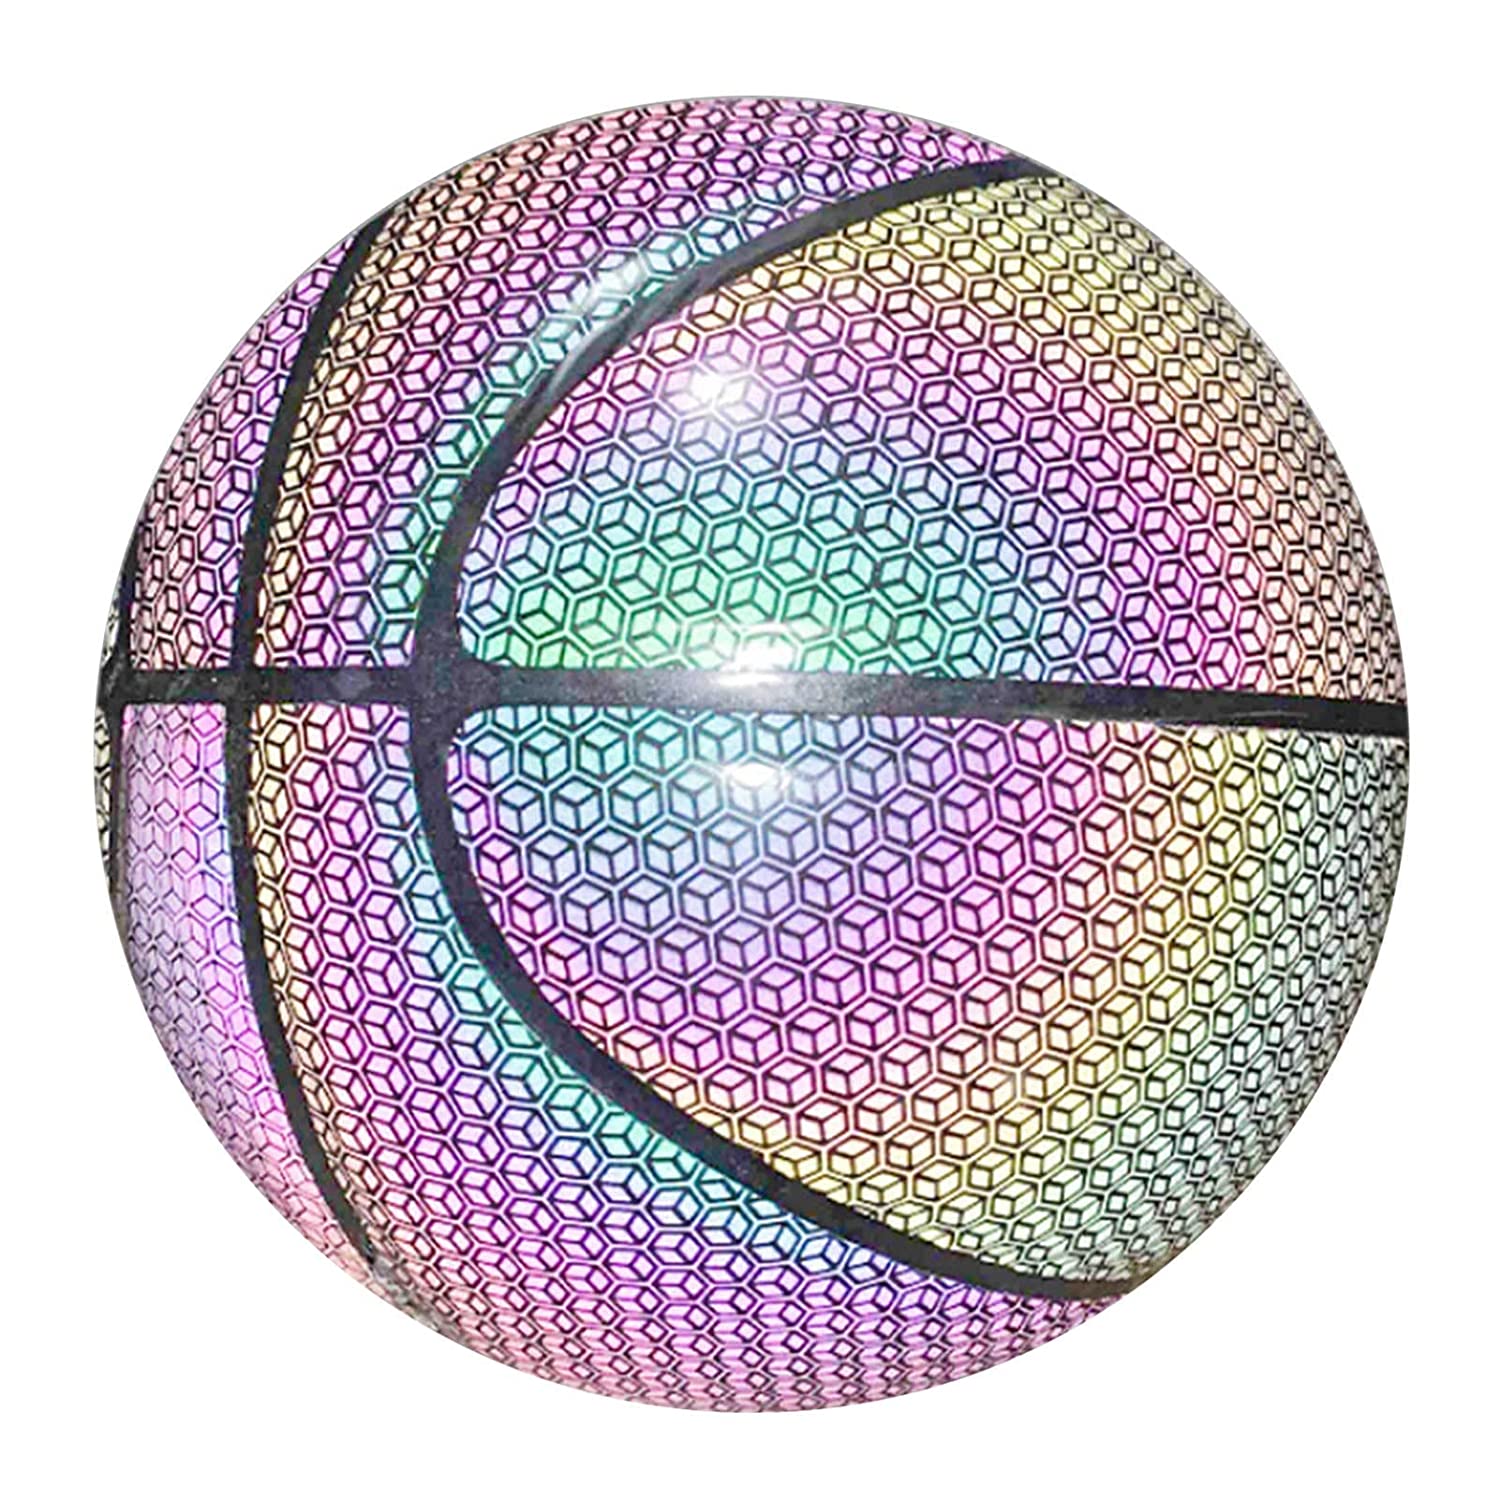 Glowing Basketball - Laric